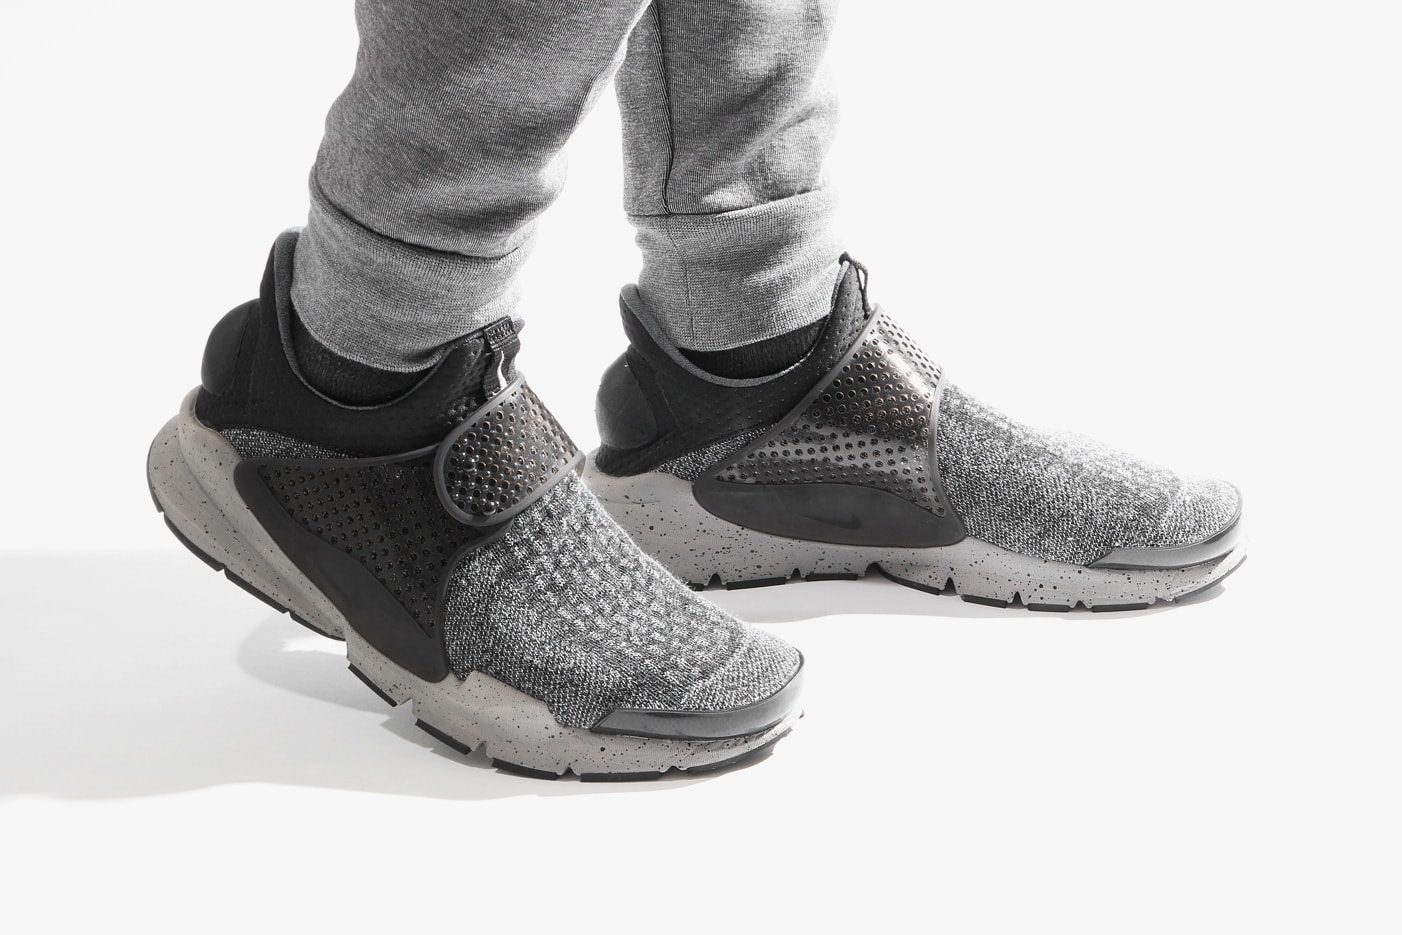 Nike Sock Dart Marled Gray Colorway Sneaker